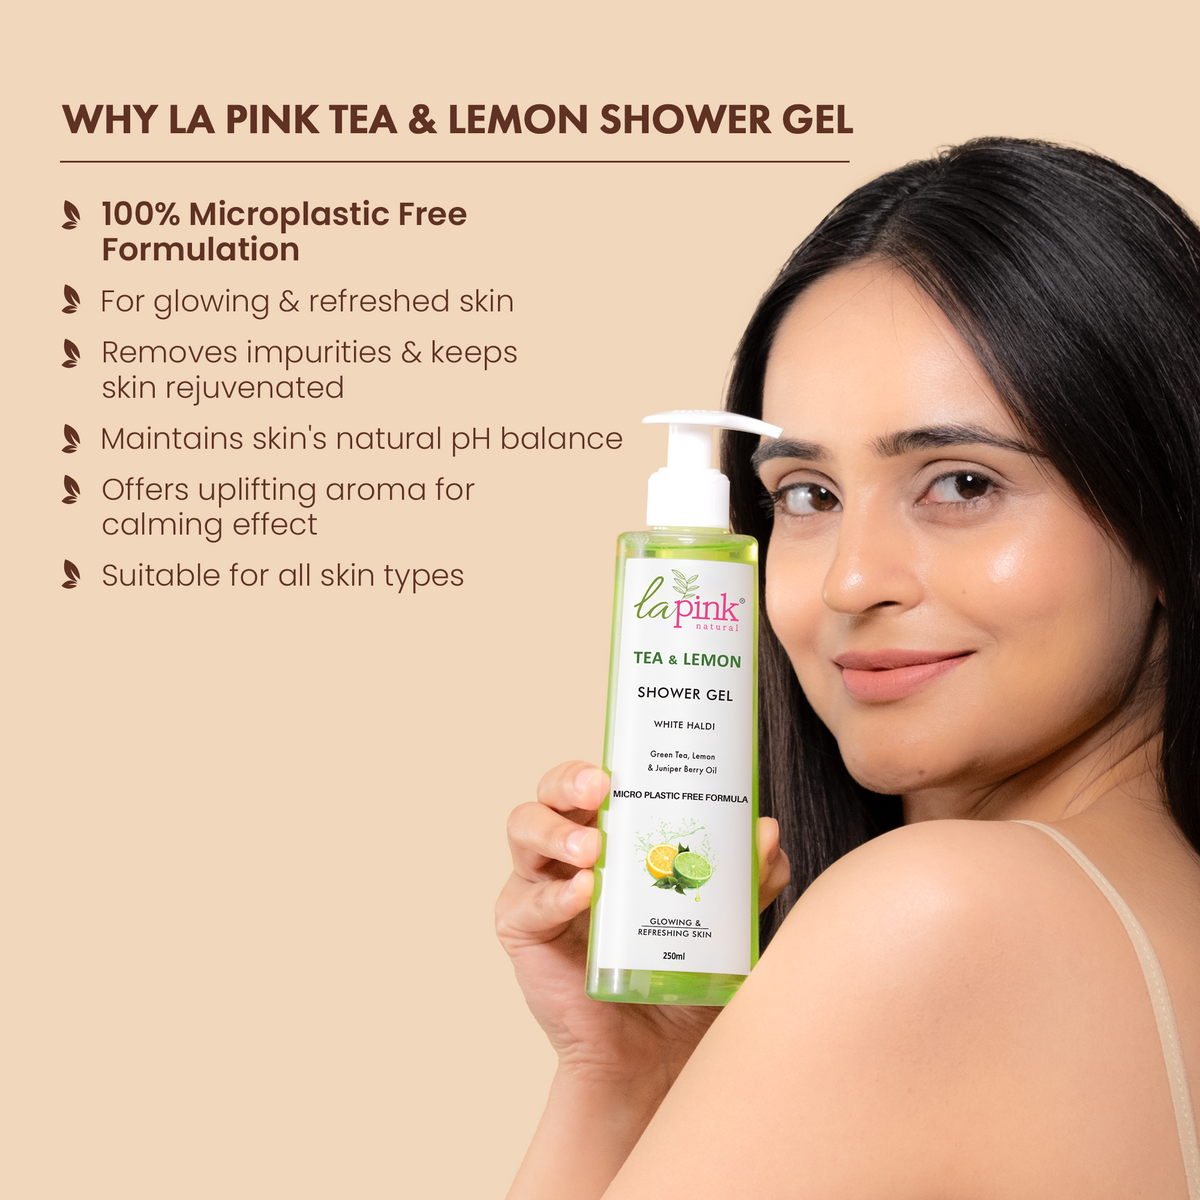 "La Pink Tea & Lemon Shower Gel with White Haldi for Glowing & Refreshing Skin 250 ML "